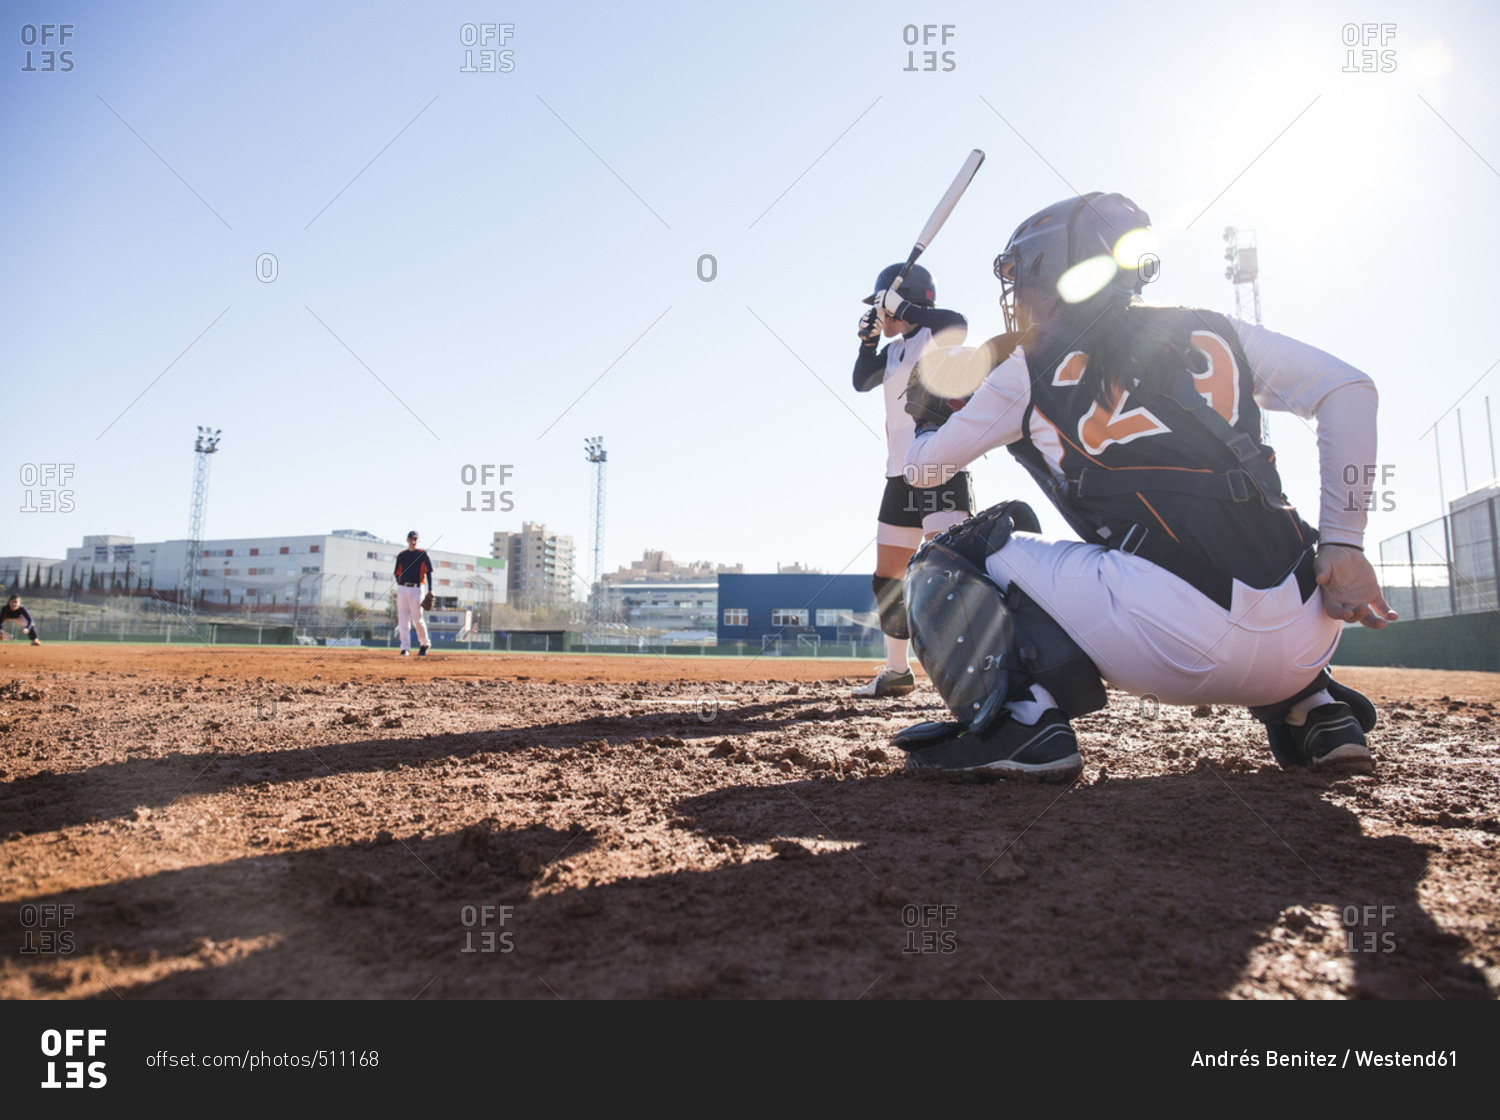 Baseball players during a baseball game